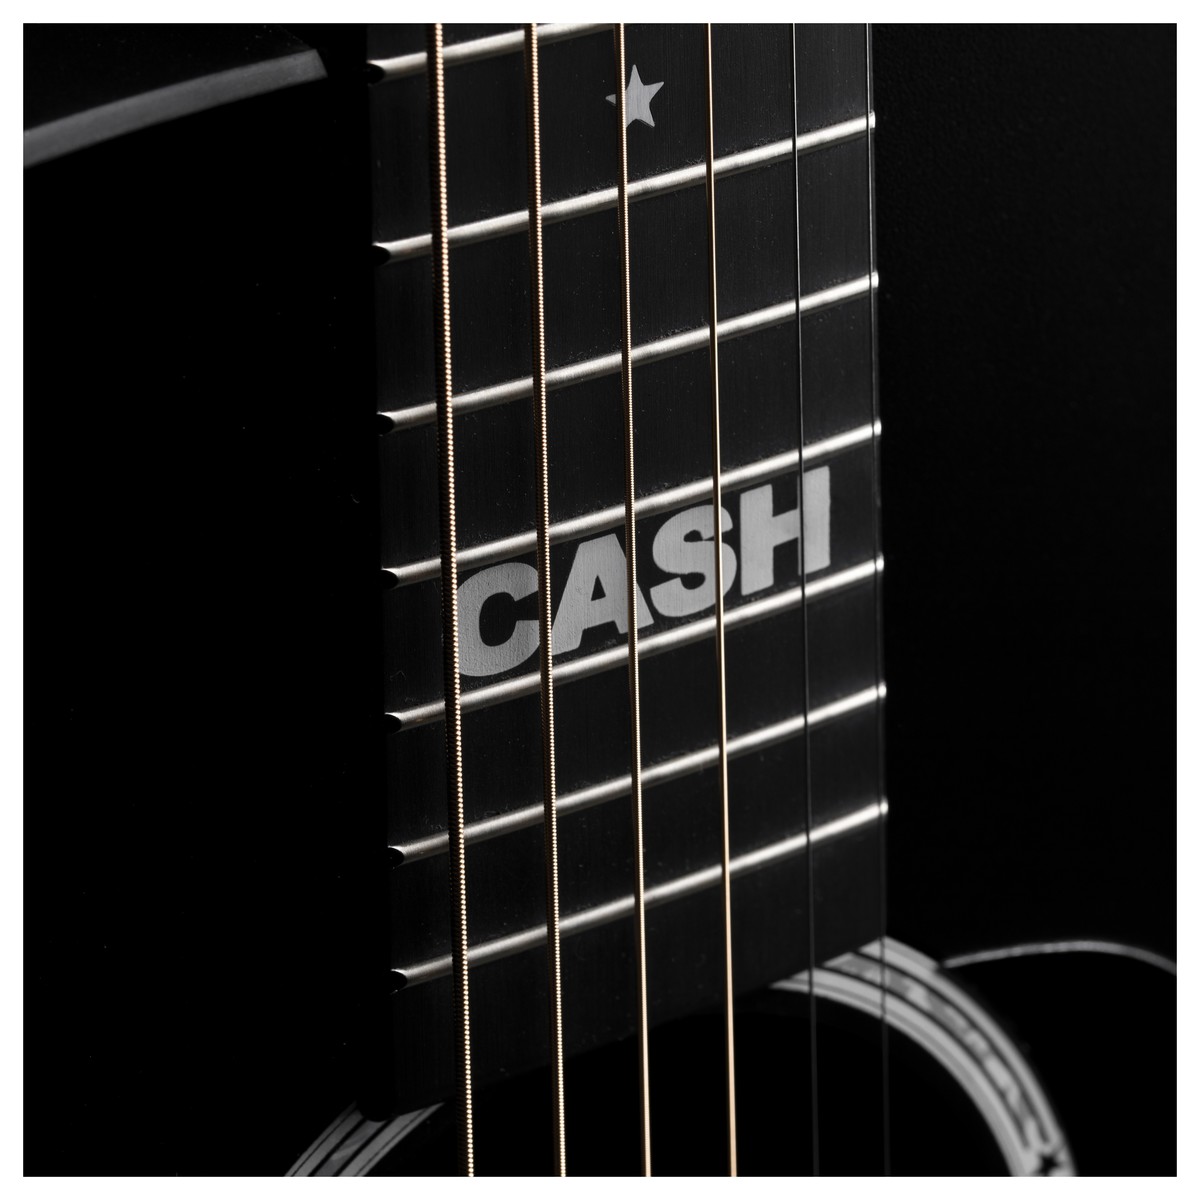 Martin Johnny Cash Dx Signature Dreadnought Hpl Ric - Black - Electro acoustic guitar - Variation 4